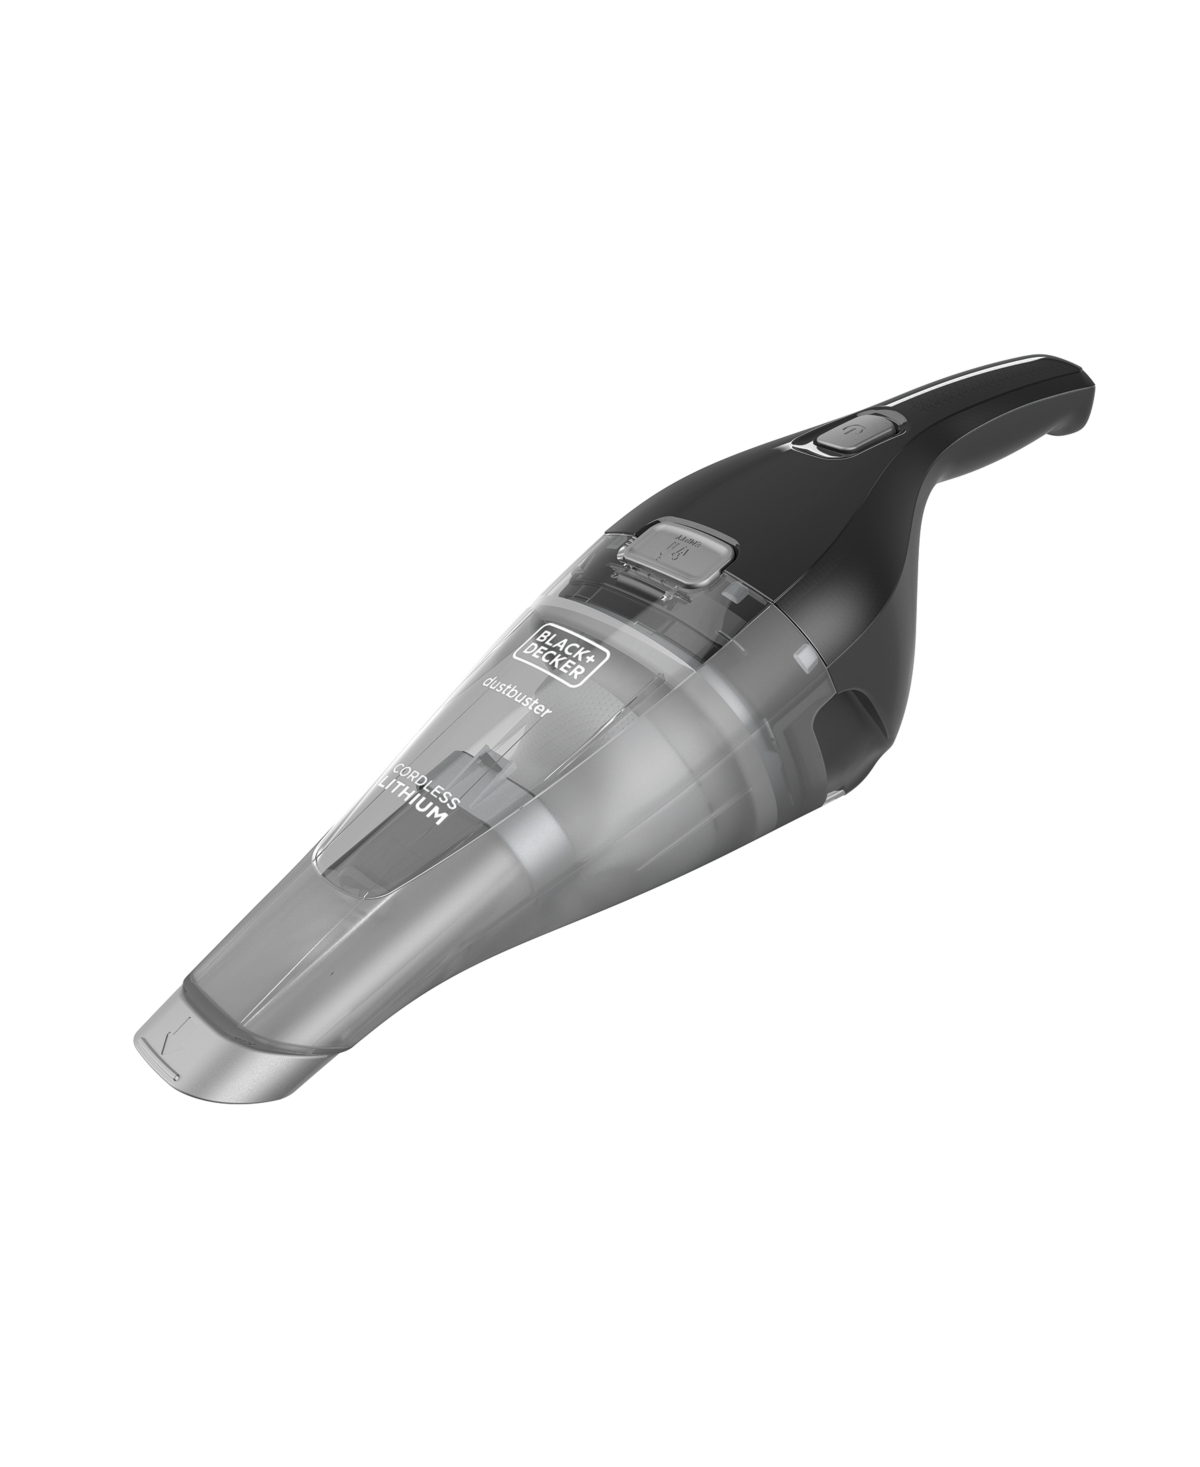 Black & Decker Dustbuster 7.2v Max 2.0ah Cordless Hand Vacuum In Black